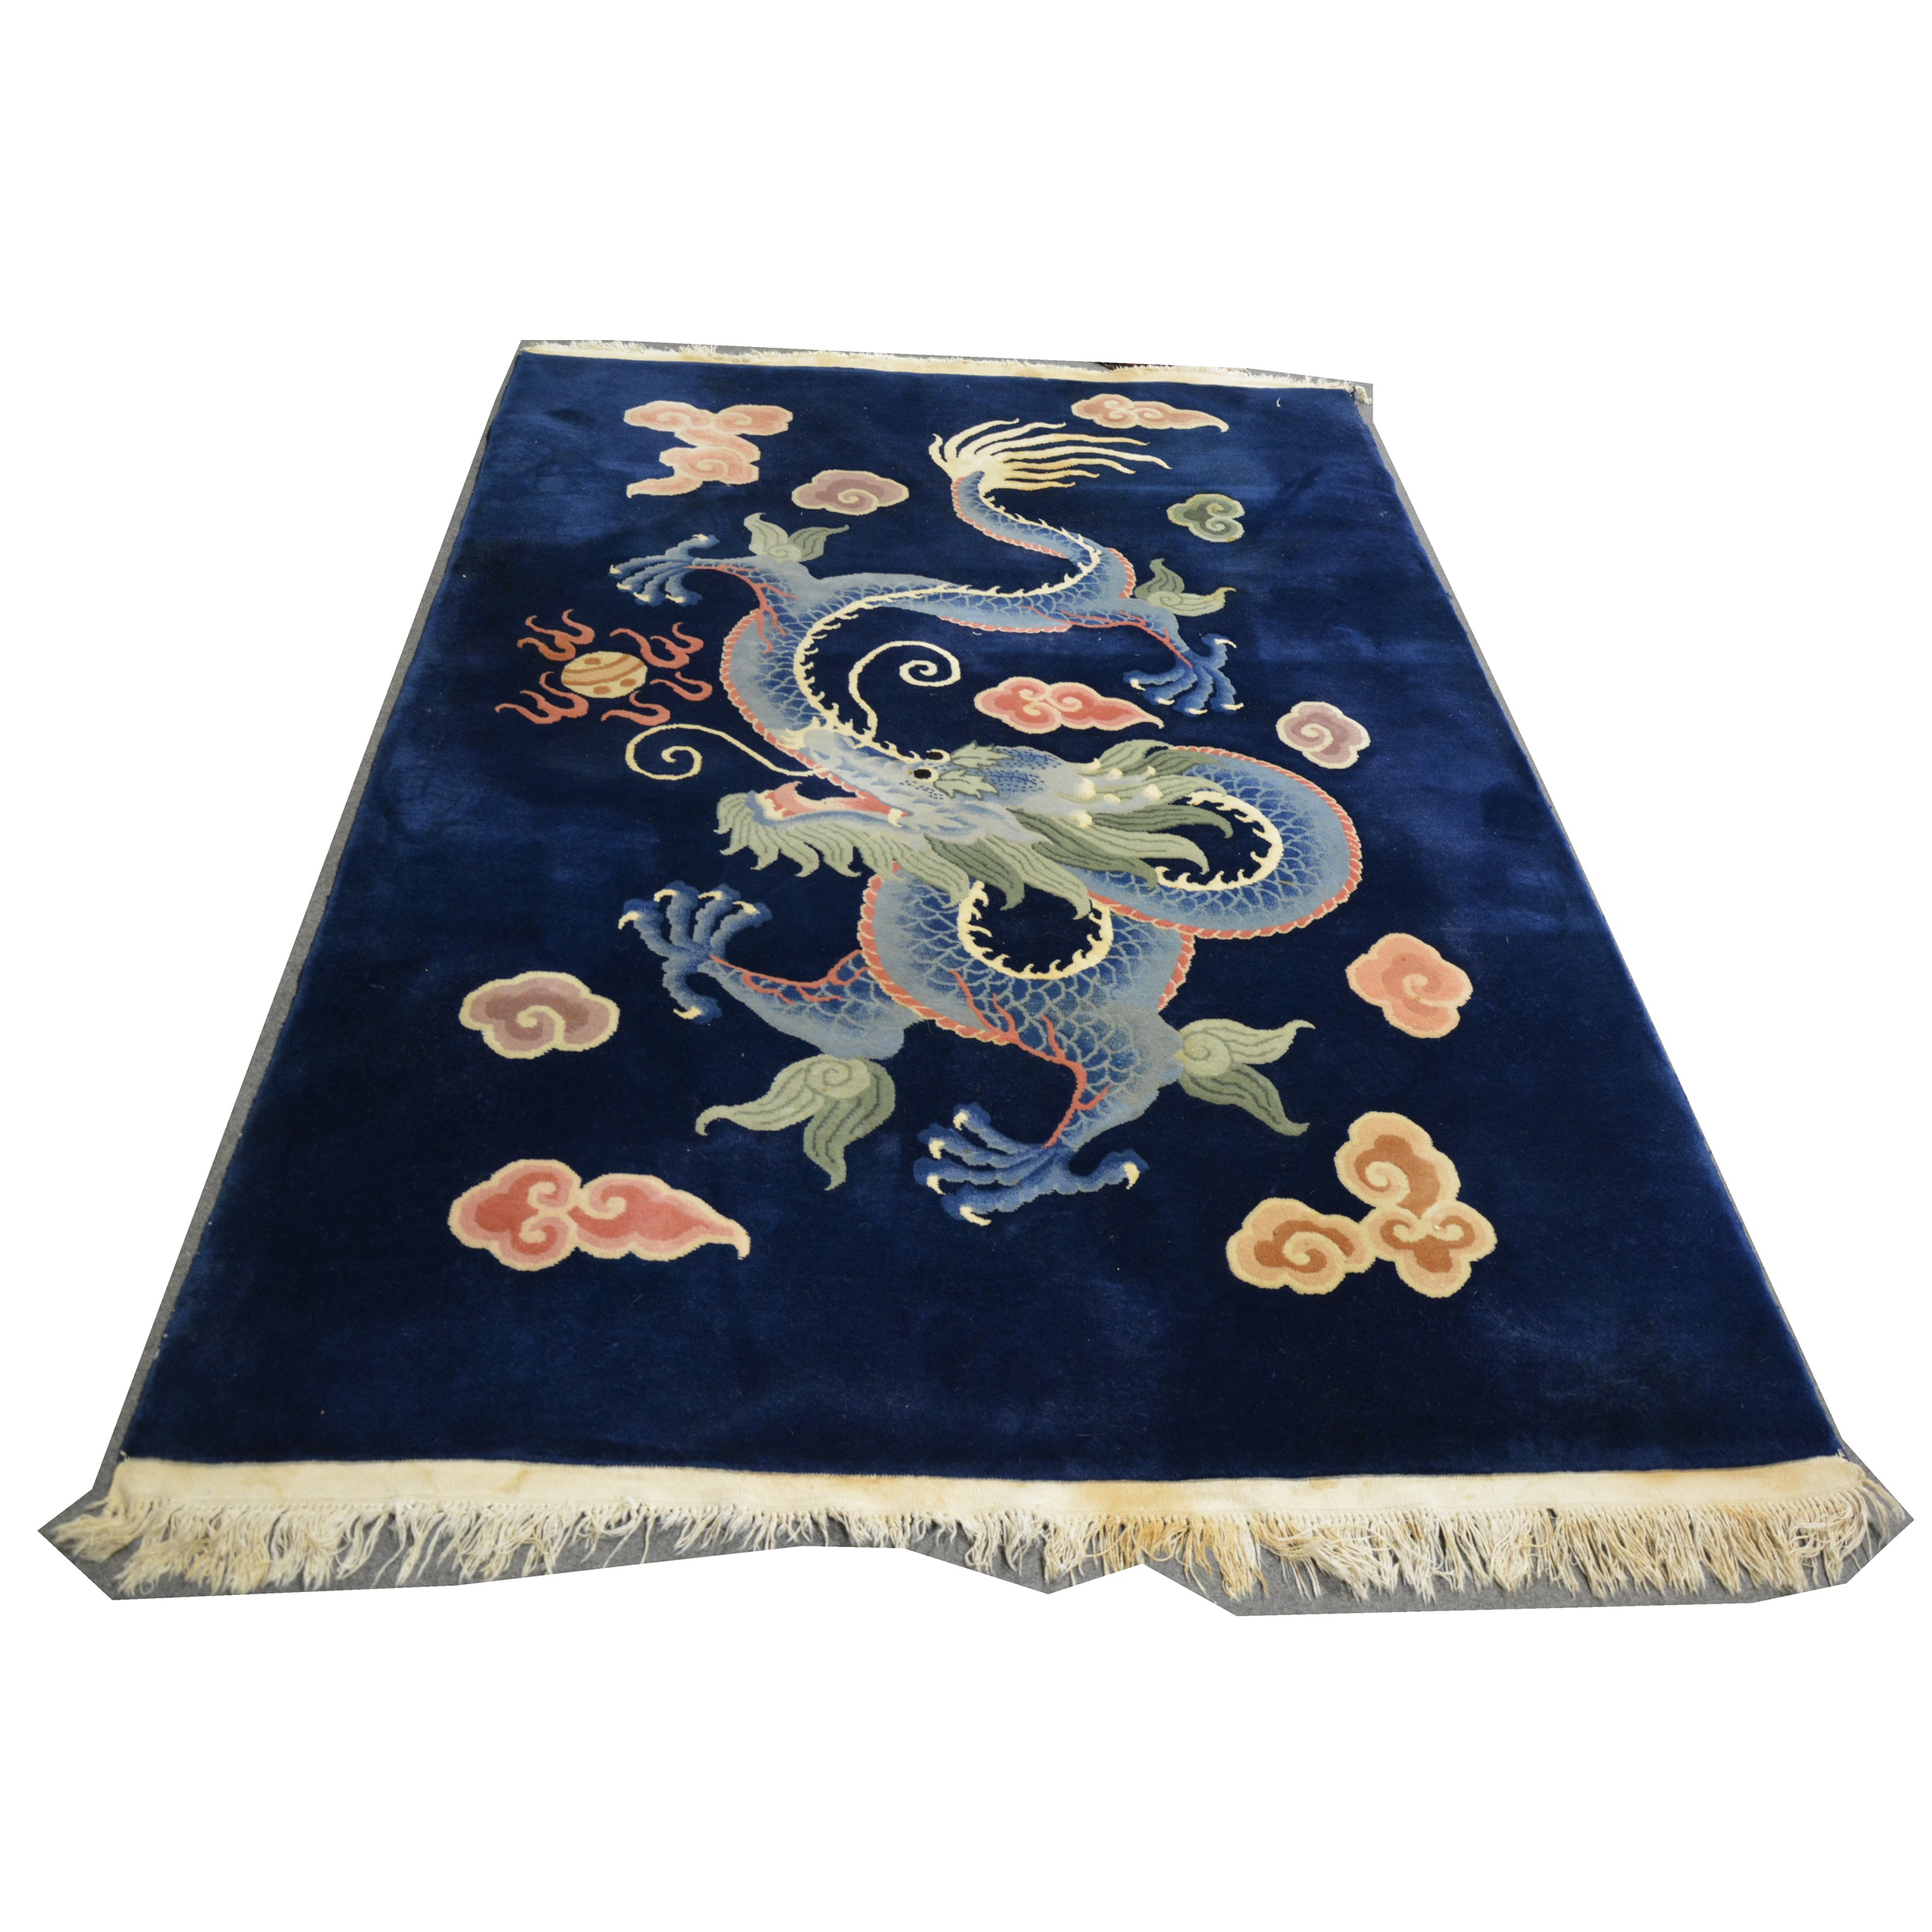 Chinese carpet, dragon and cloud motif